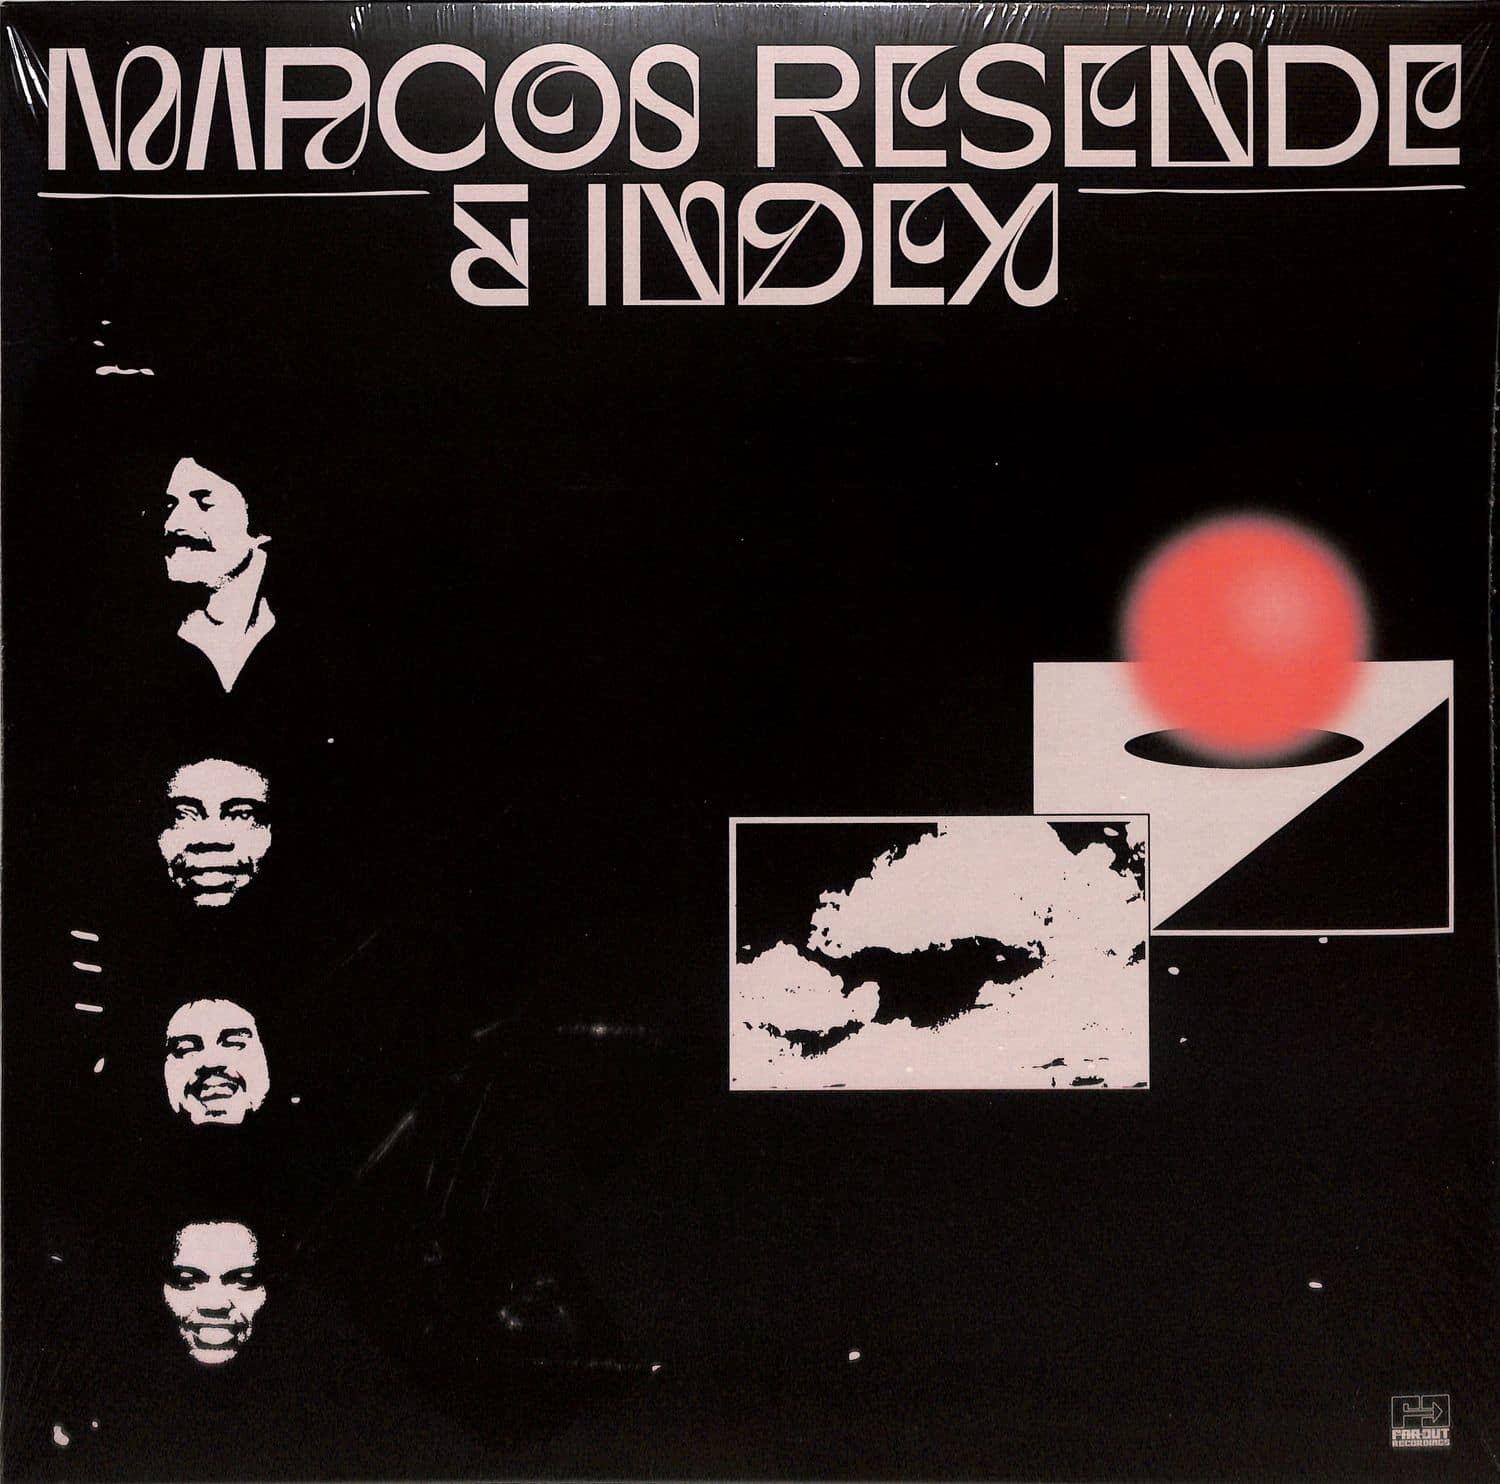 Marcos Resende & Index - MARCOS RESENDE & INDEX 